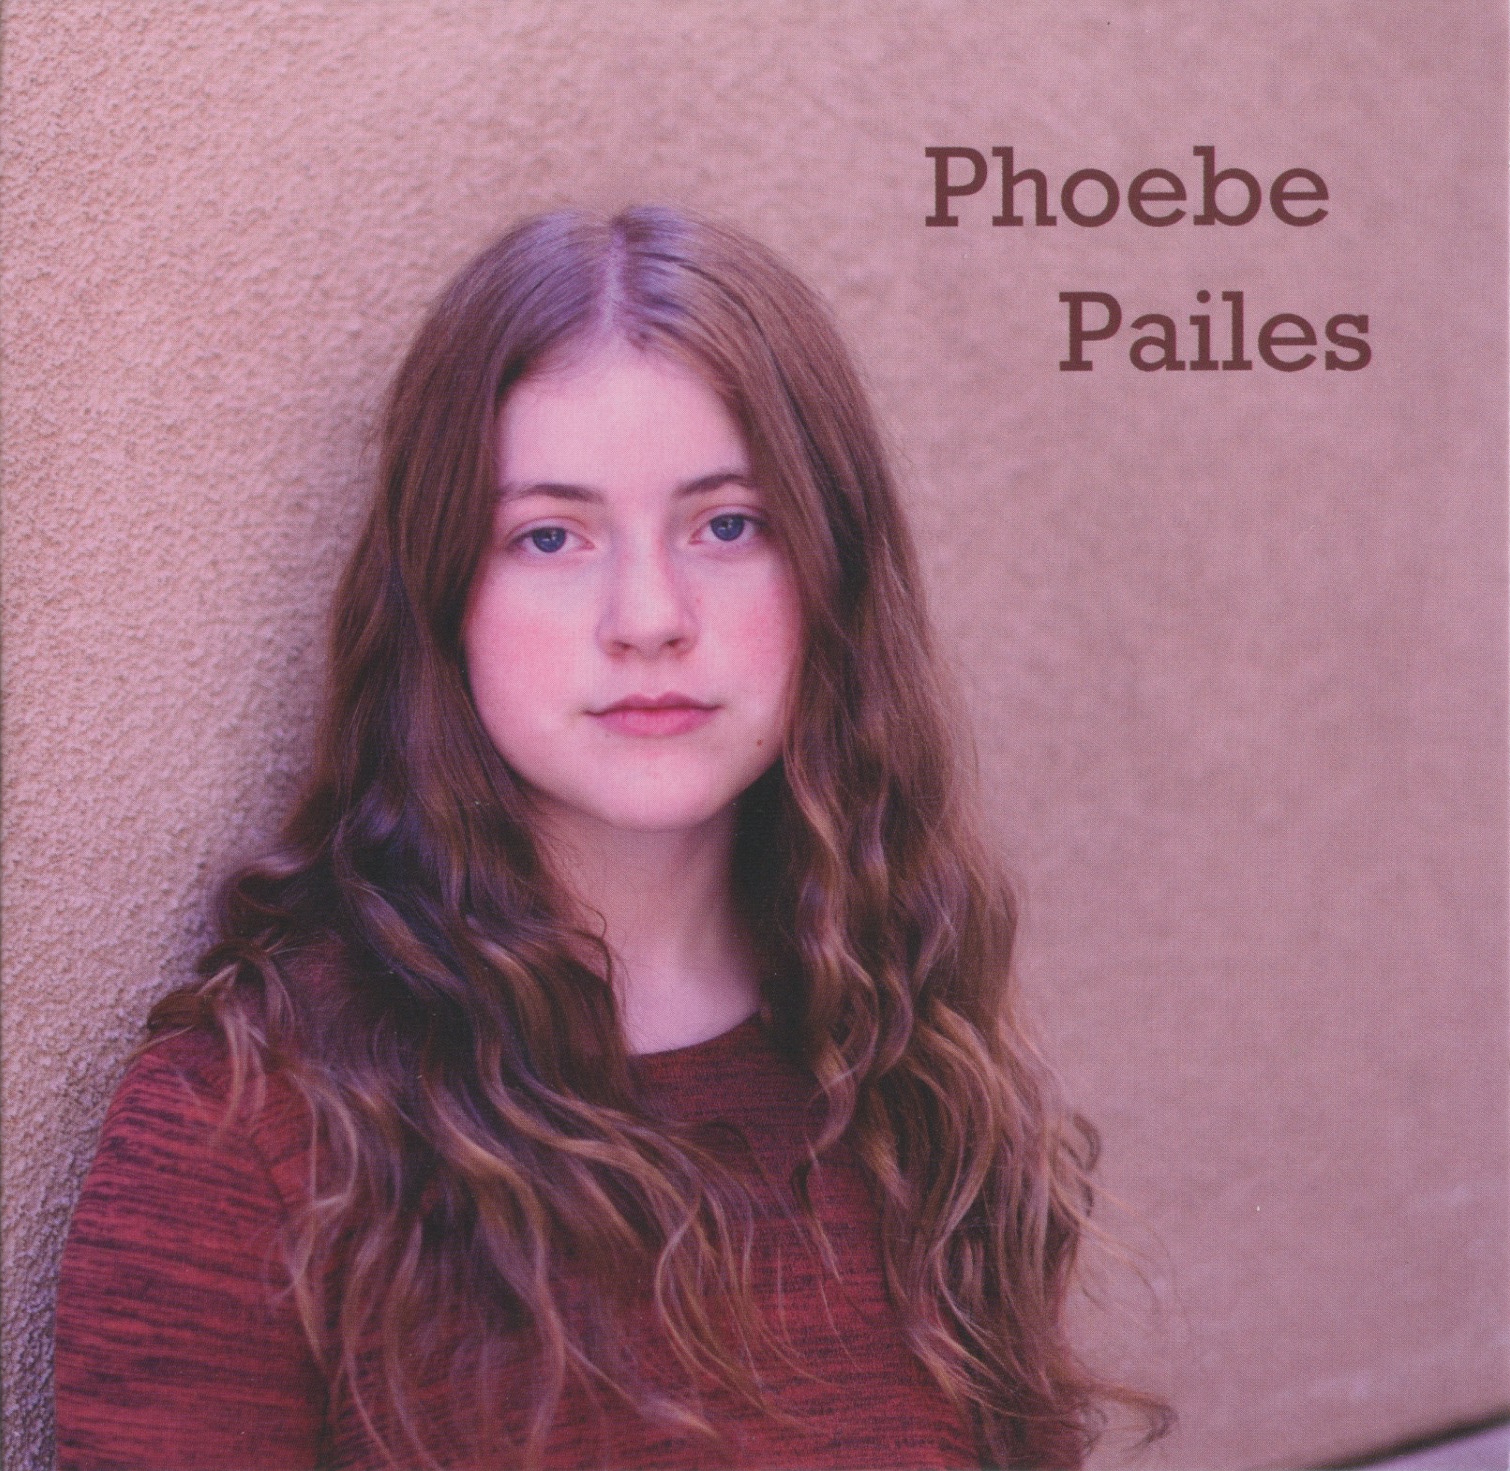 Phoebe Album Cover Scan.jpeg